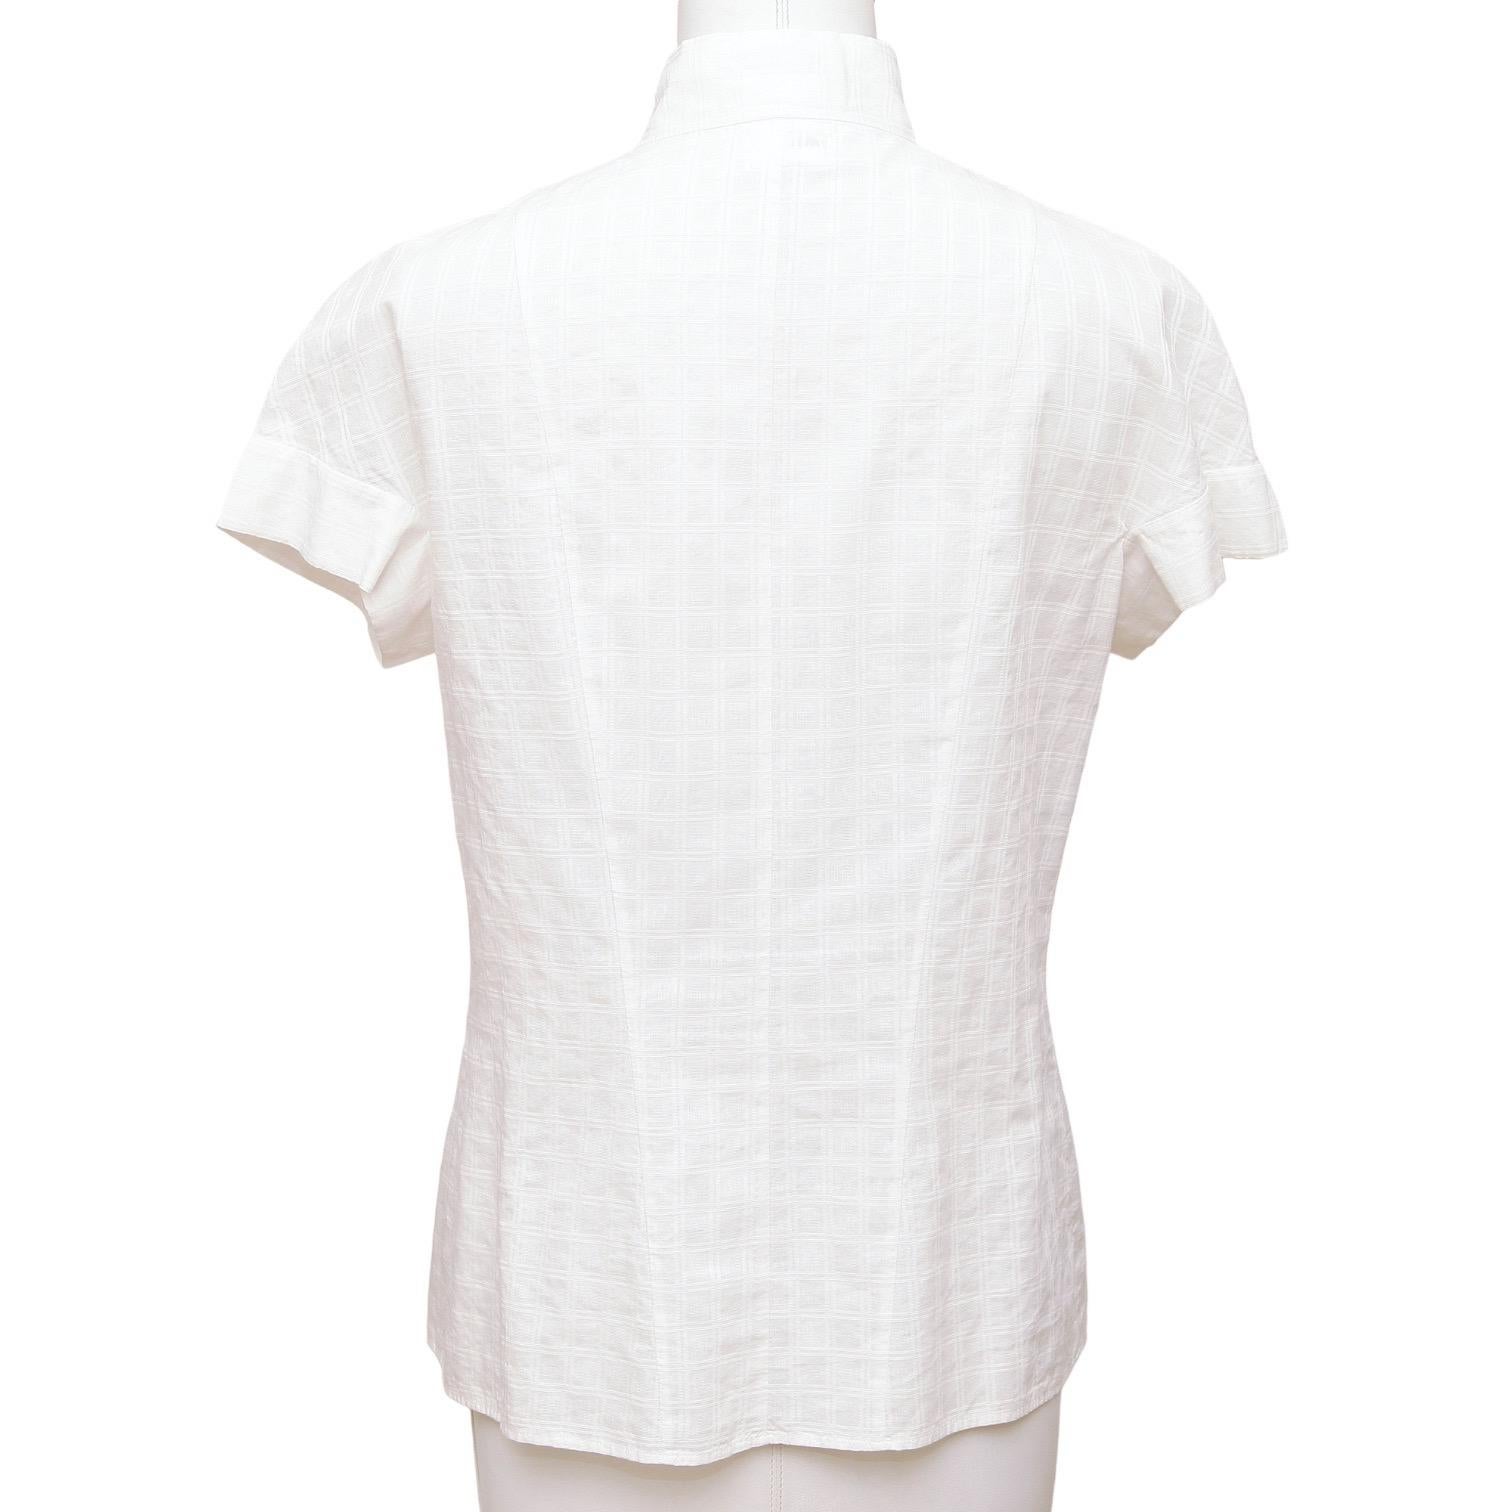 Women's CHANEL White Button Down Blouse Shirt Top Silver CC Short Sleeve Sz 40 2016